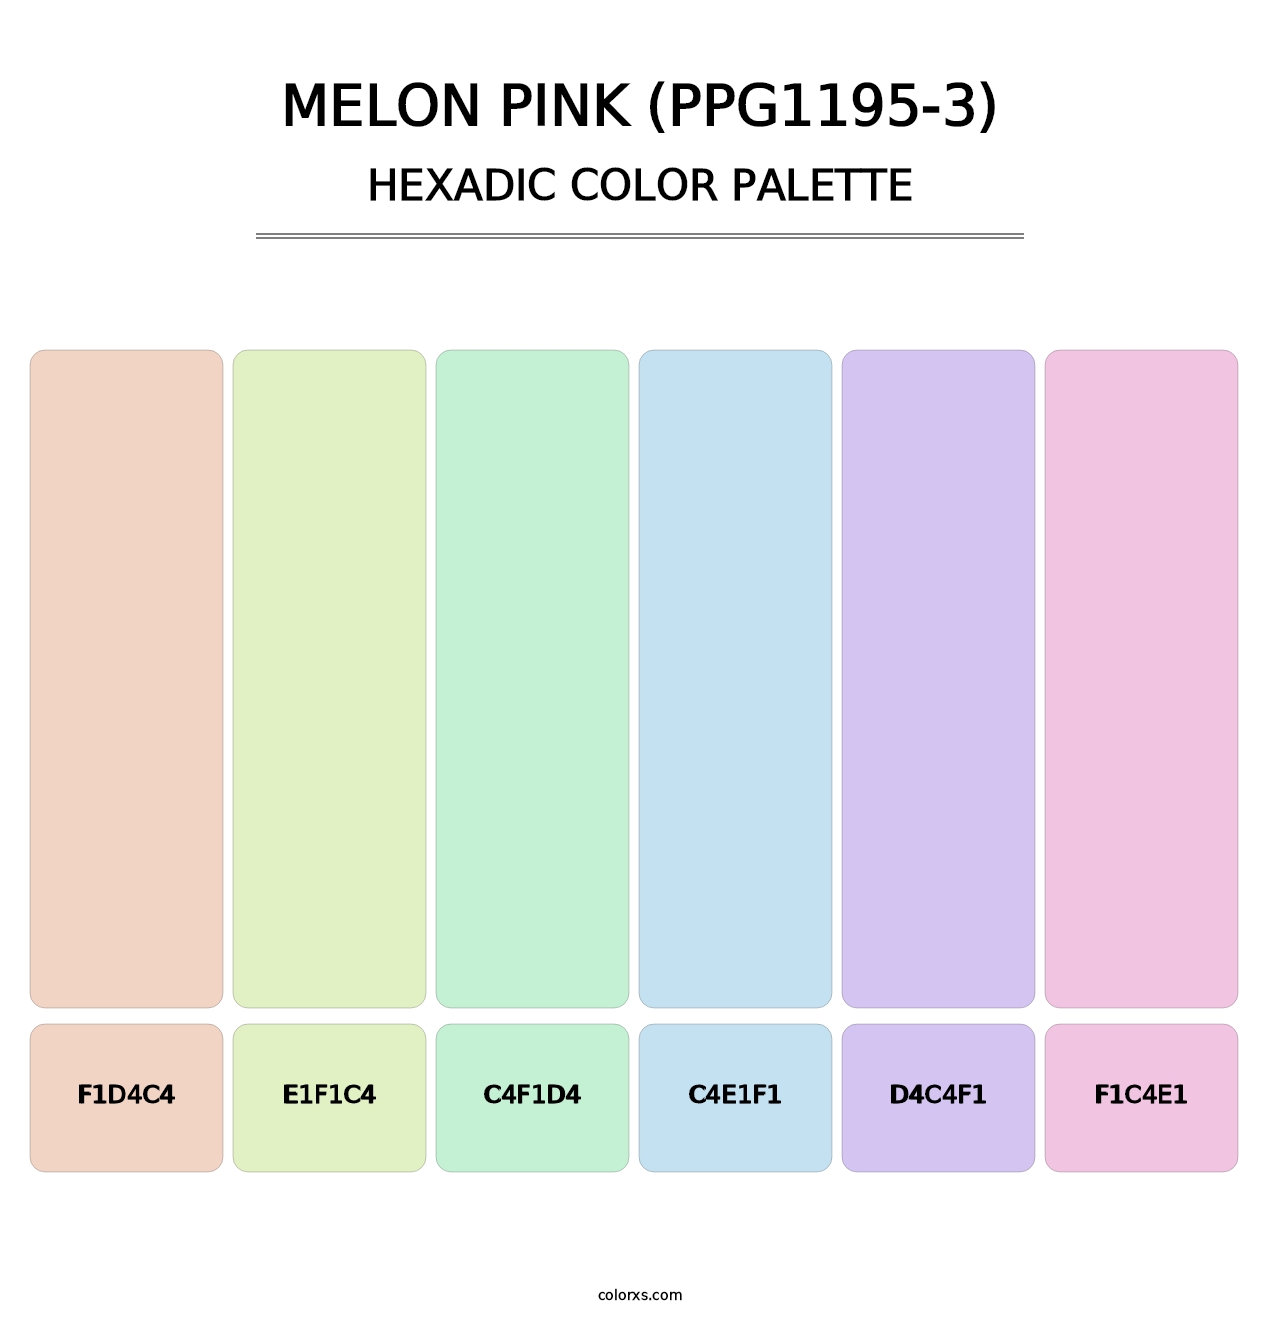 Melon Pink (PPG1195-3) - Hexadic Color Palette